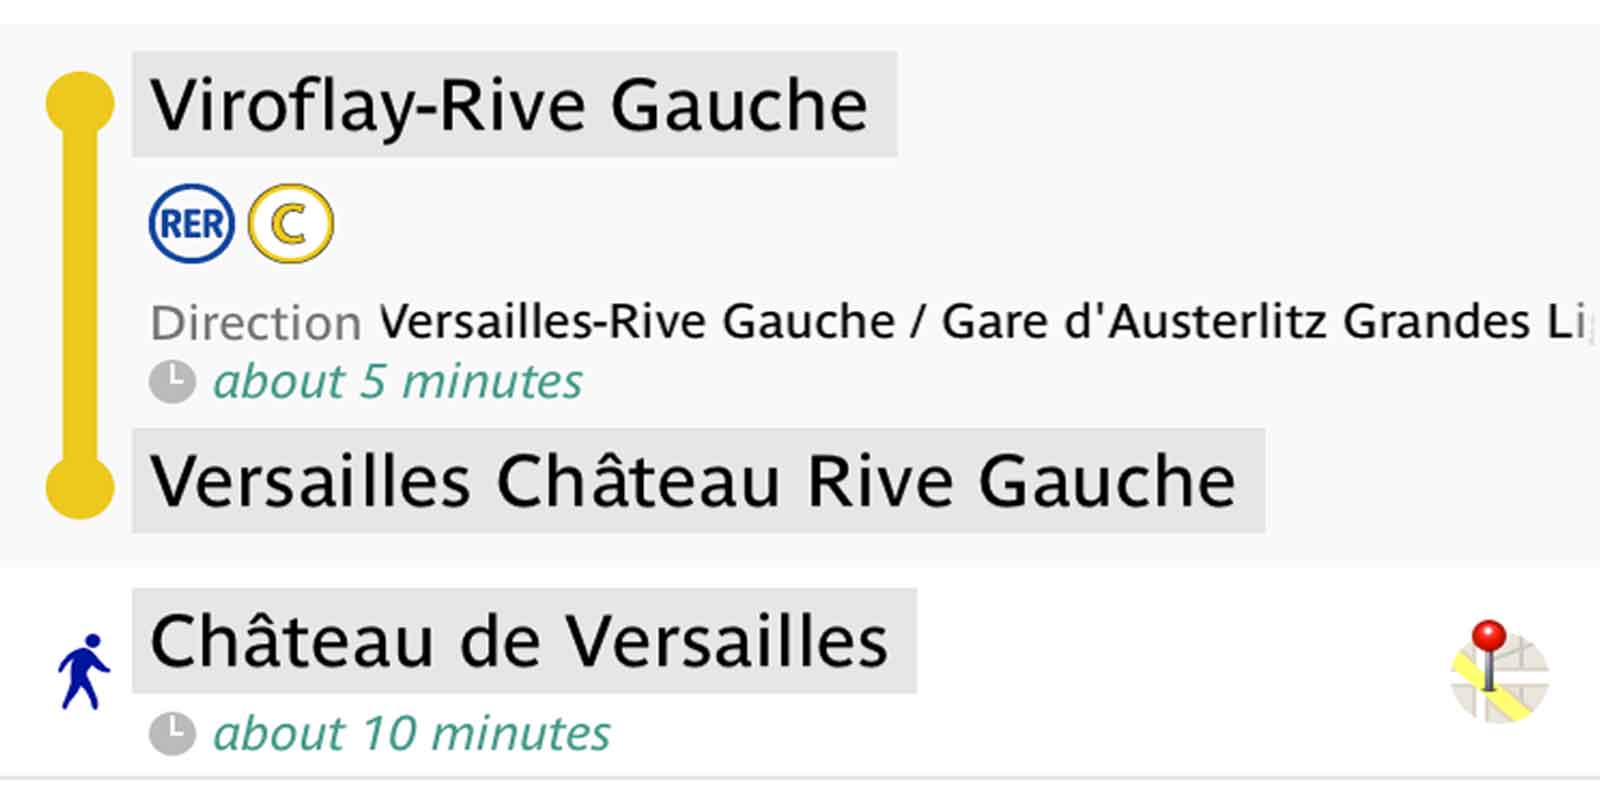 Screenshot of directions to Chateau de Versailles via Paris RER train.